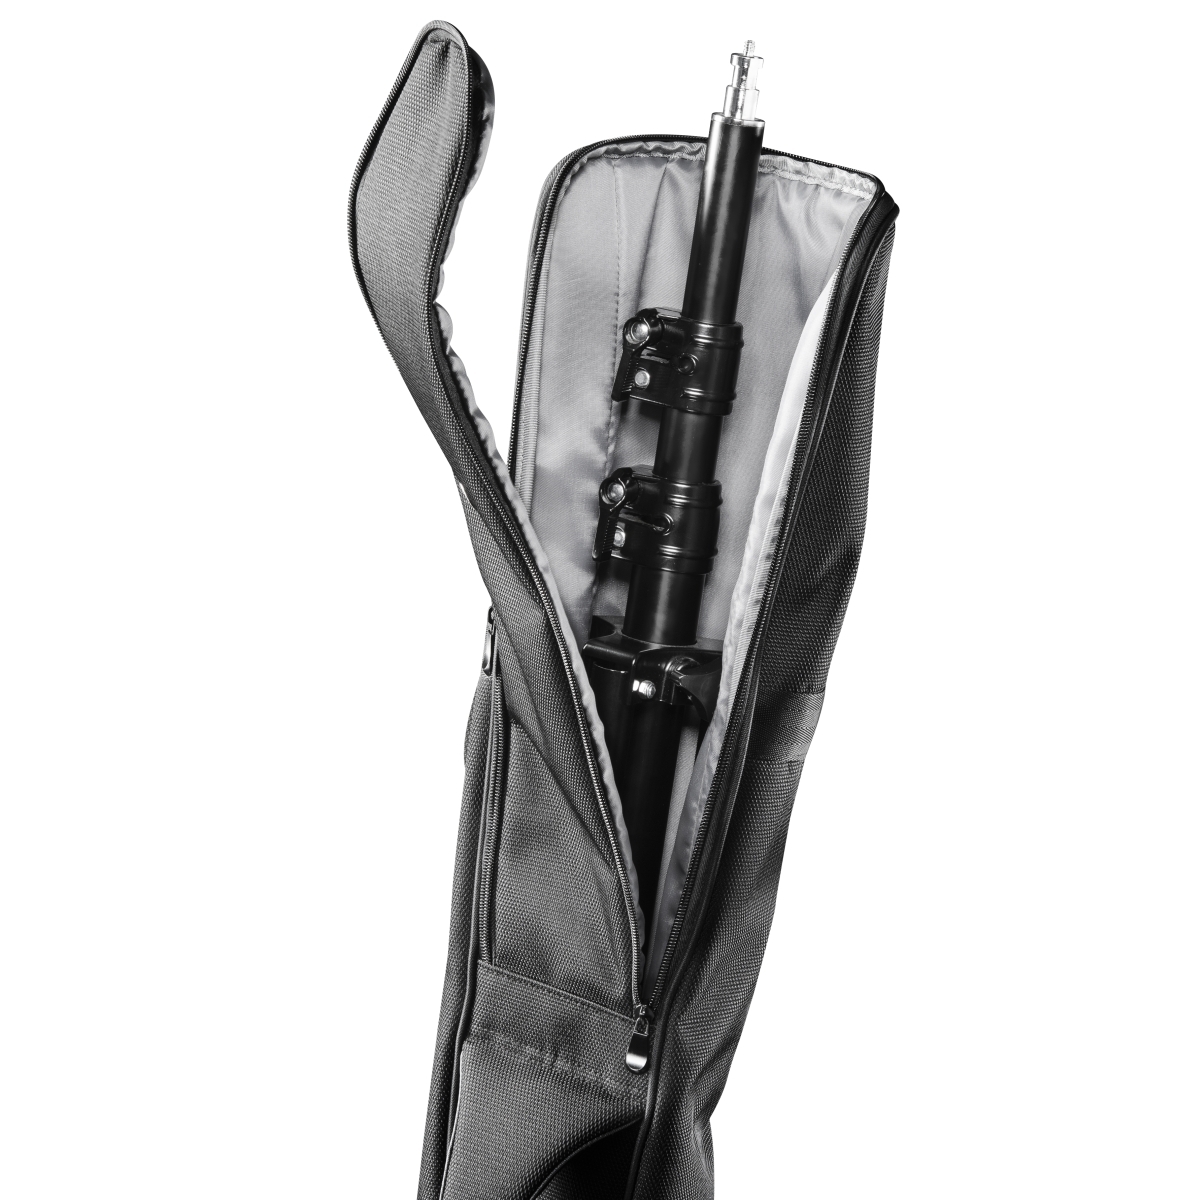 Mantona Lamp Tripod Bag, black, 99cm